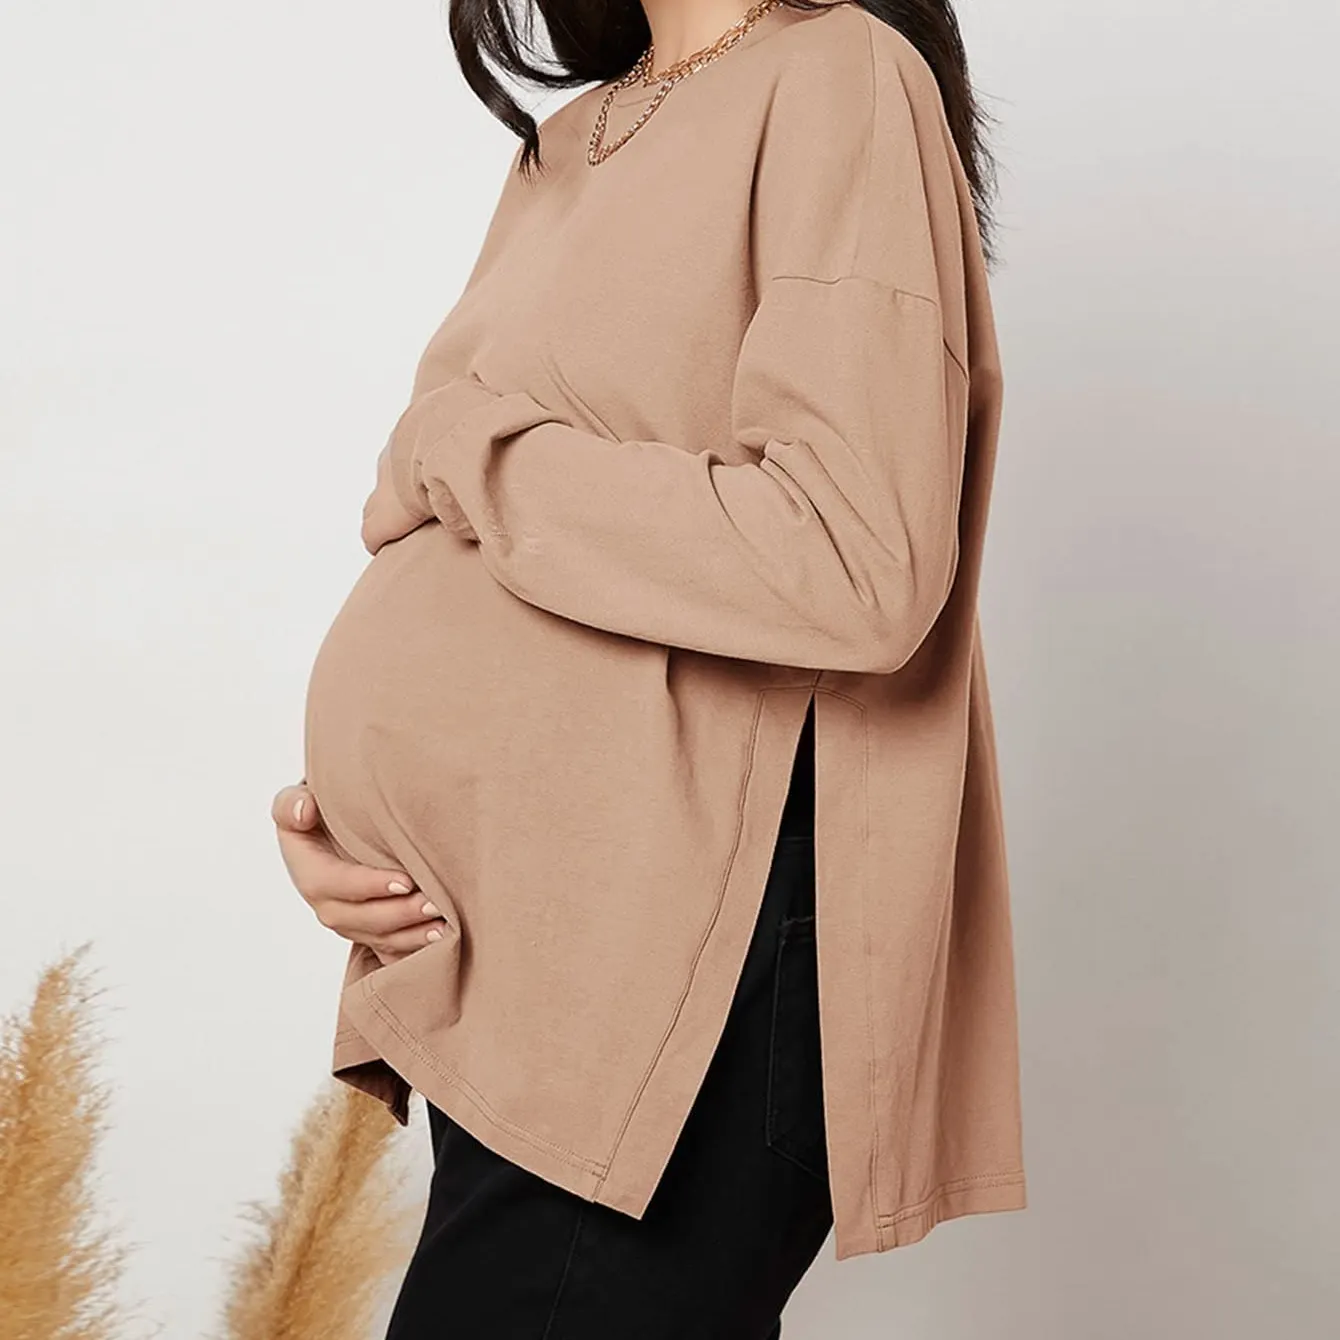 Maternidad Mujeres Side Split Basic Top Oversized Cotton Fall T Shirt Blusas Camisas para mujeres embarazadas